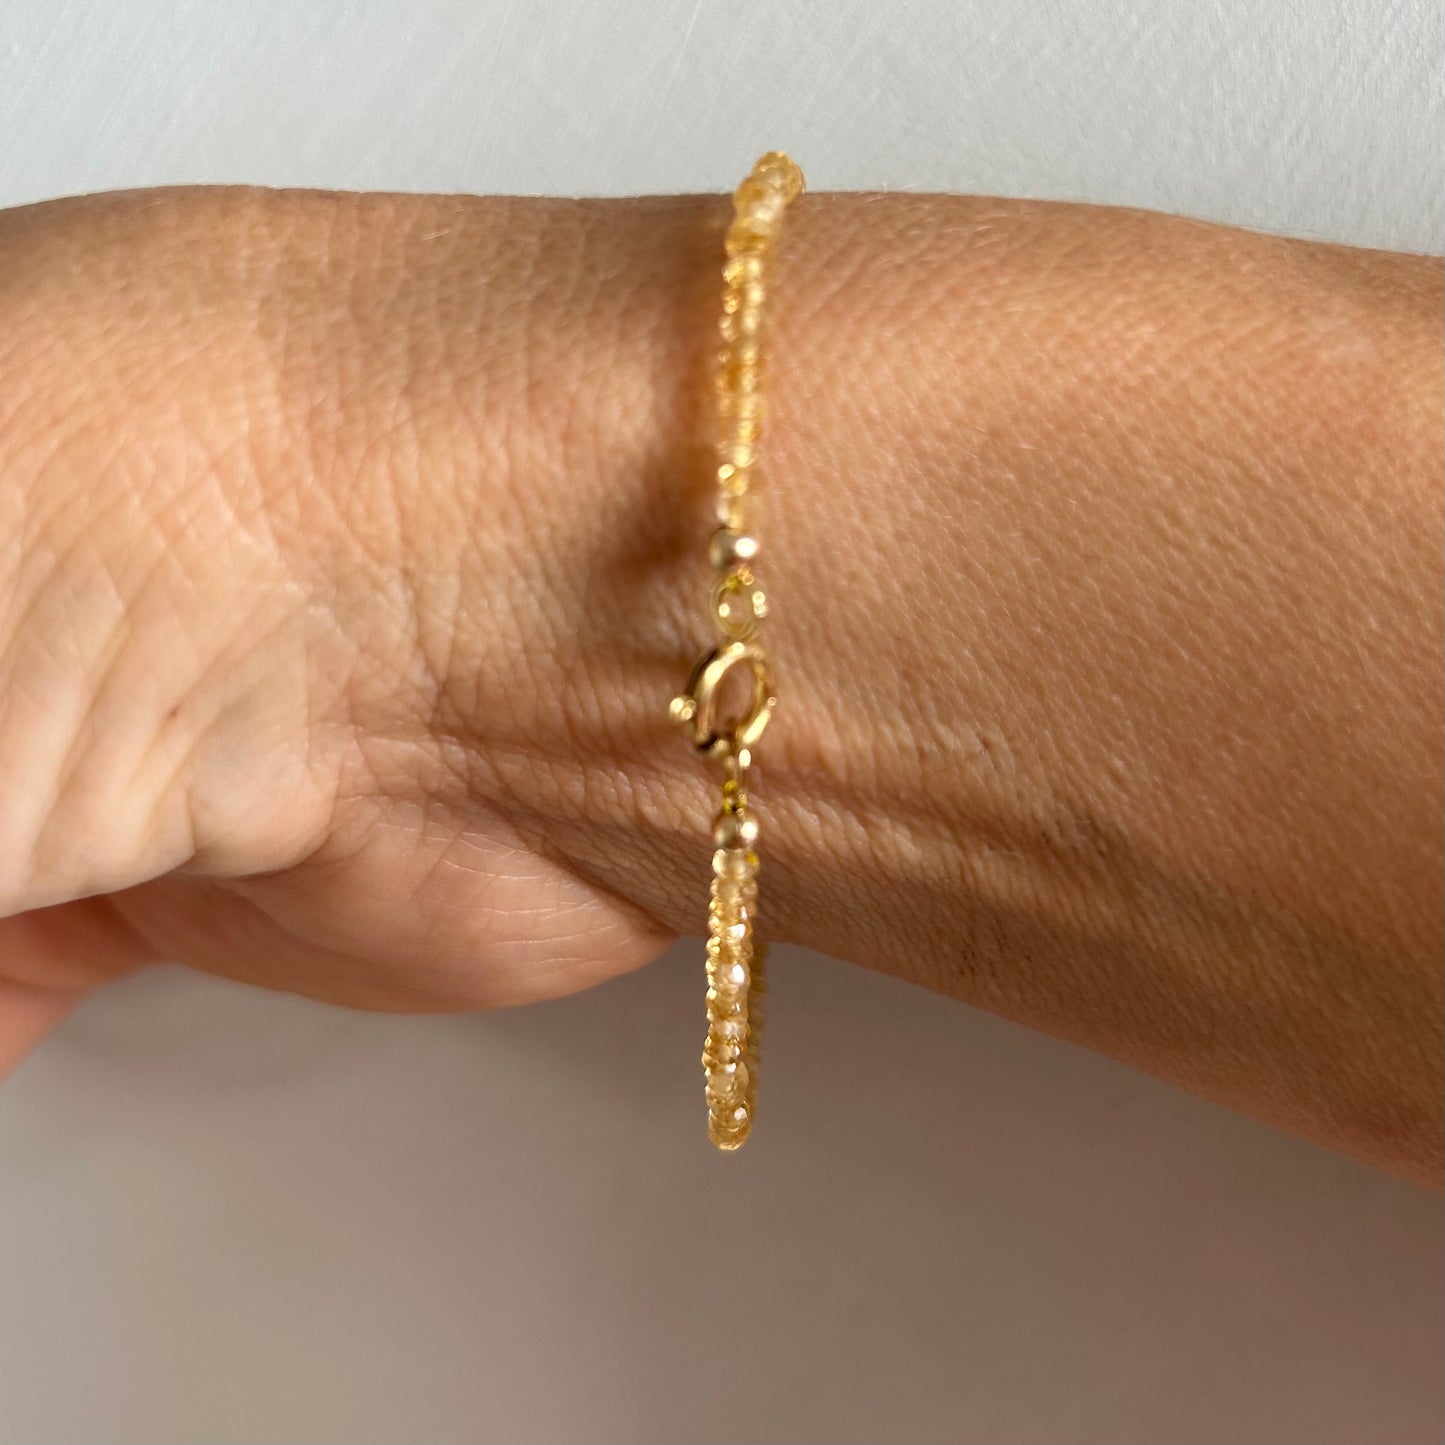 Fine Citrine gemstone bracelet with lapis pendant